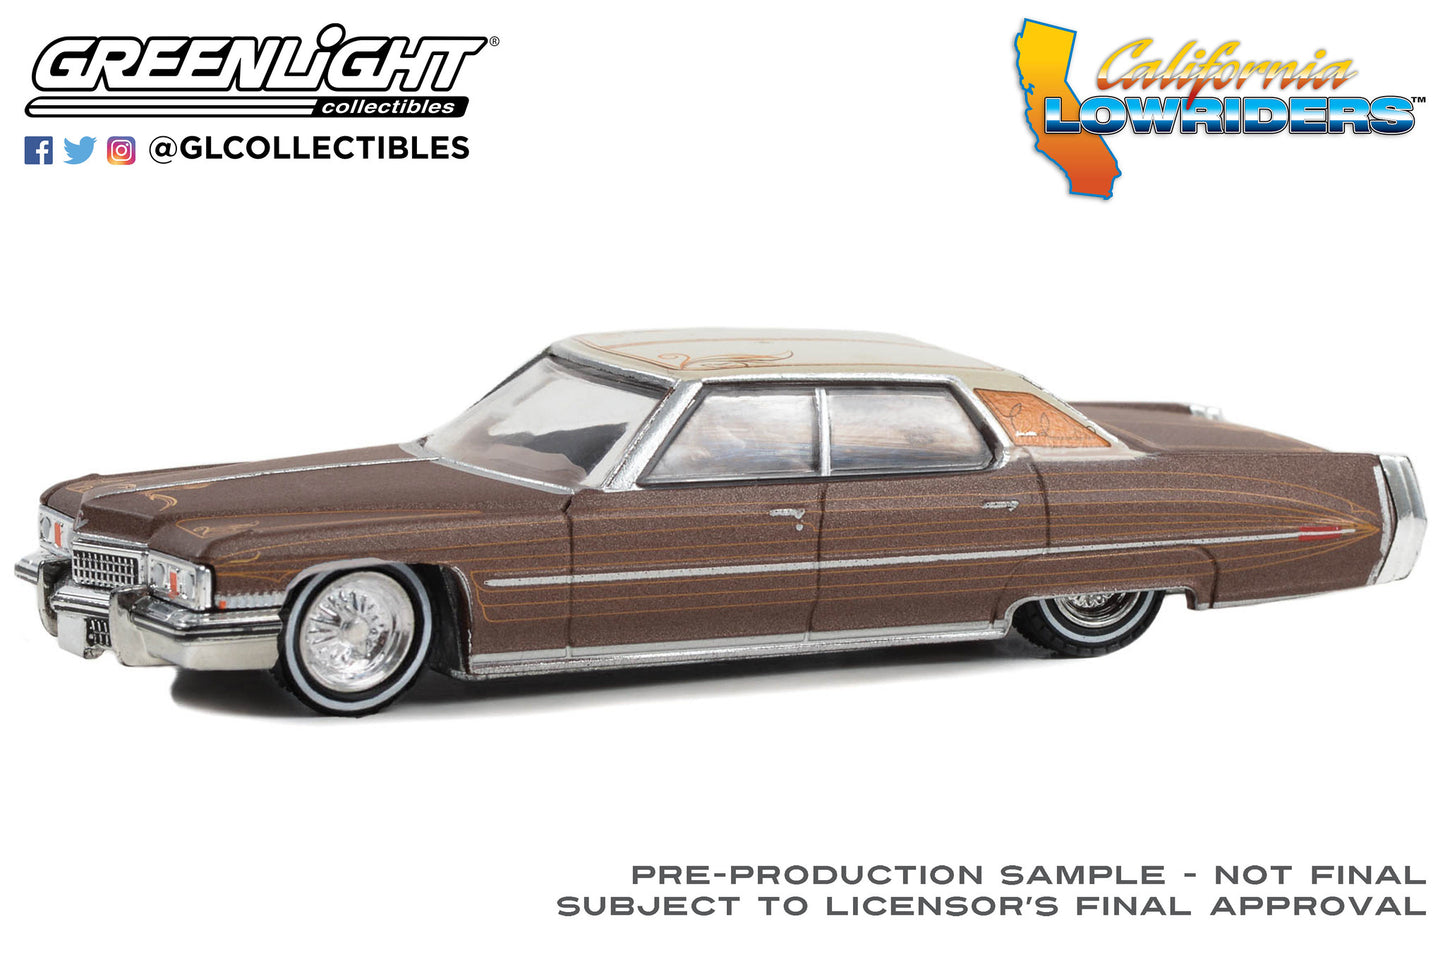 GreenLight 1:64 California Lowriders Series 4 - 1973 Cadillac Sedan deVille - Dark Brown Metallic with Light Brown Pinstripes 63050-E